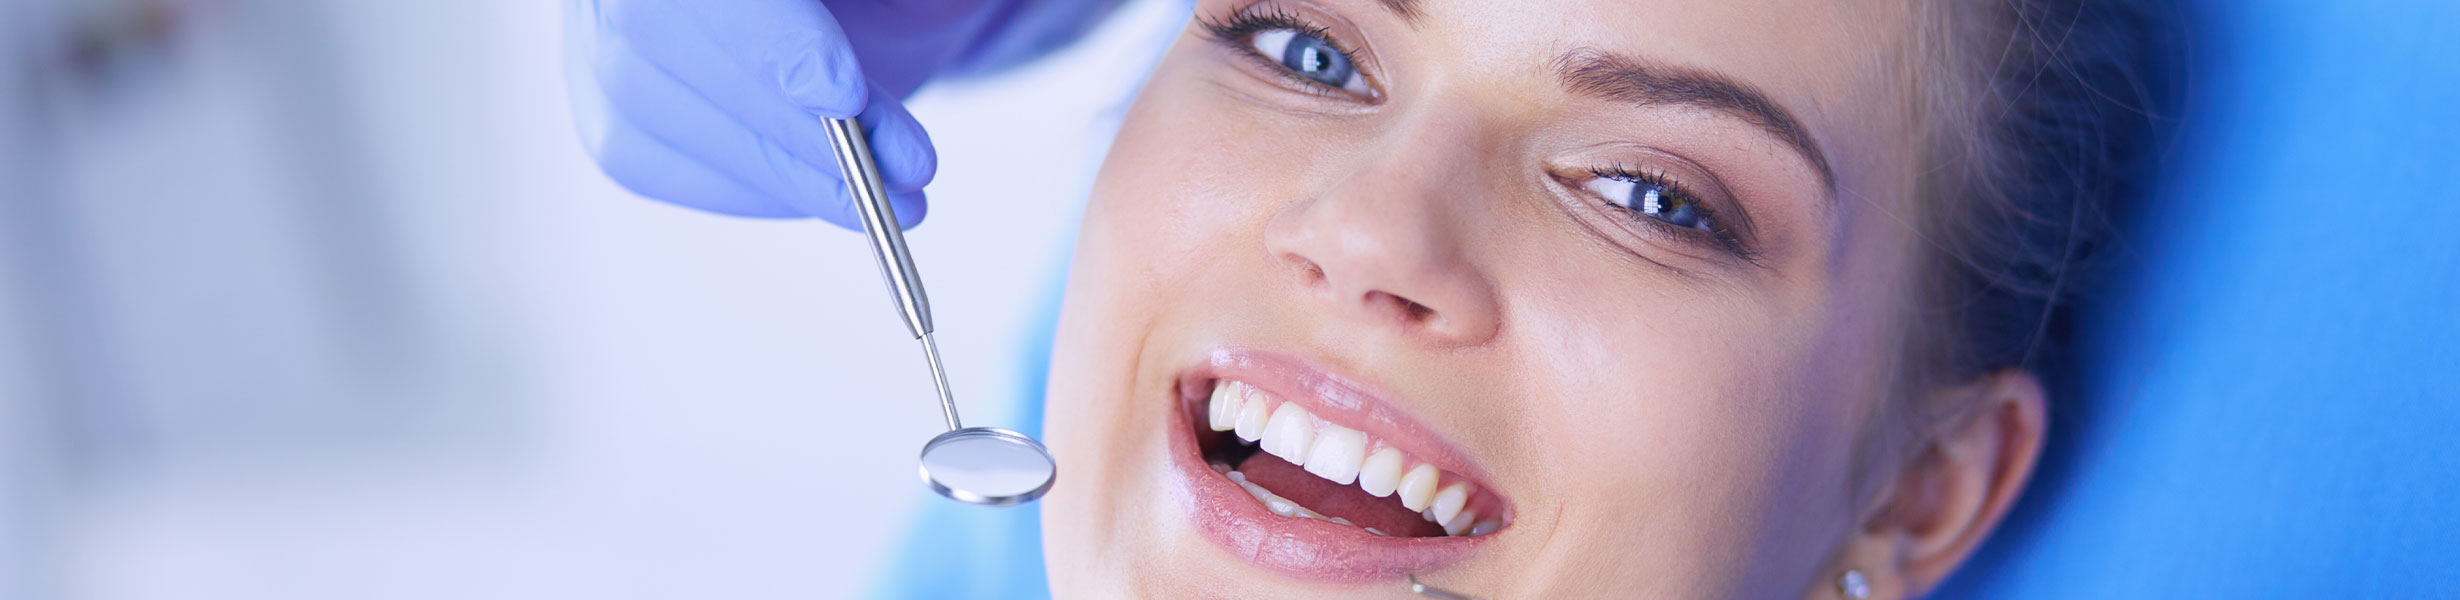 Woman smiling at the dental